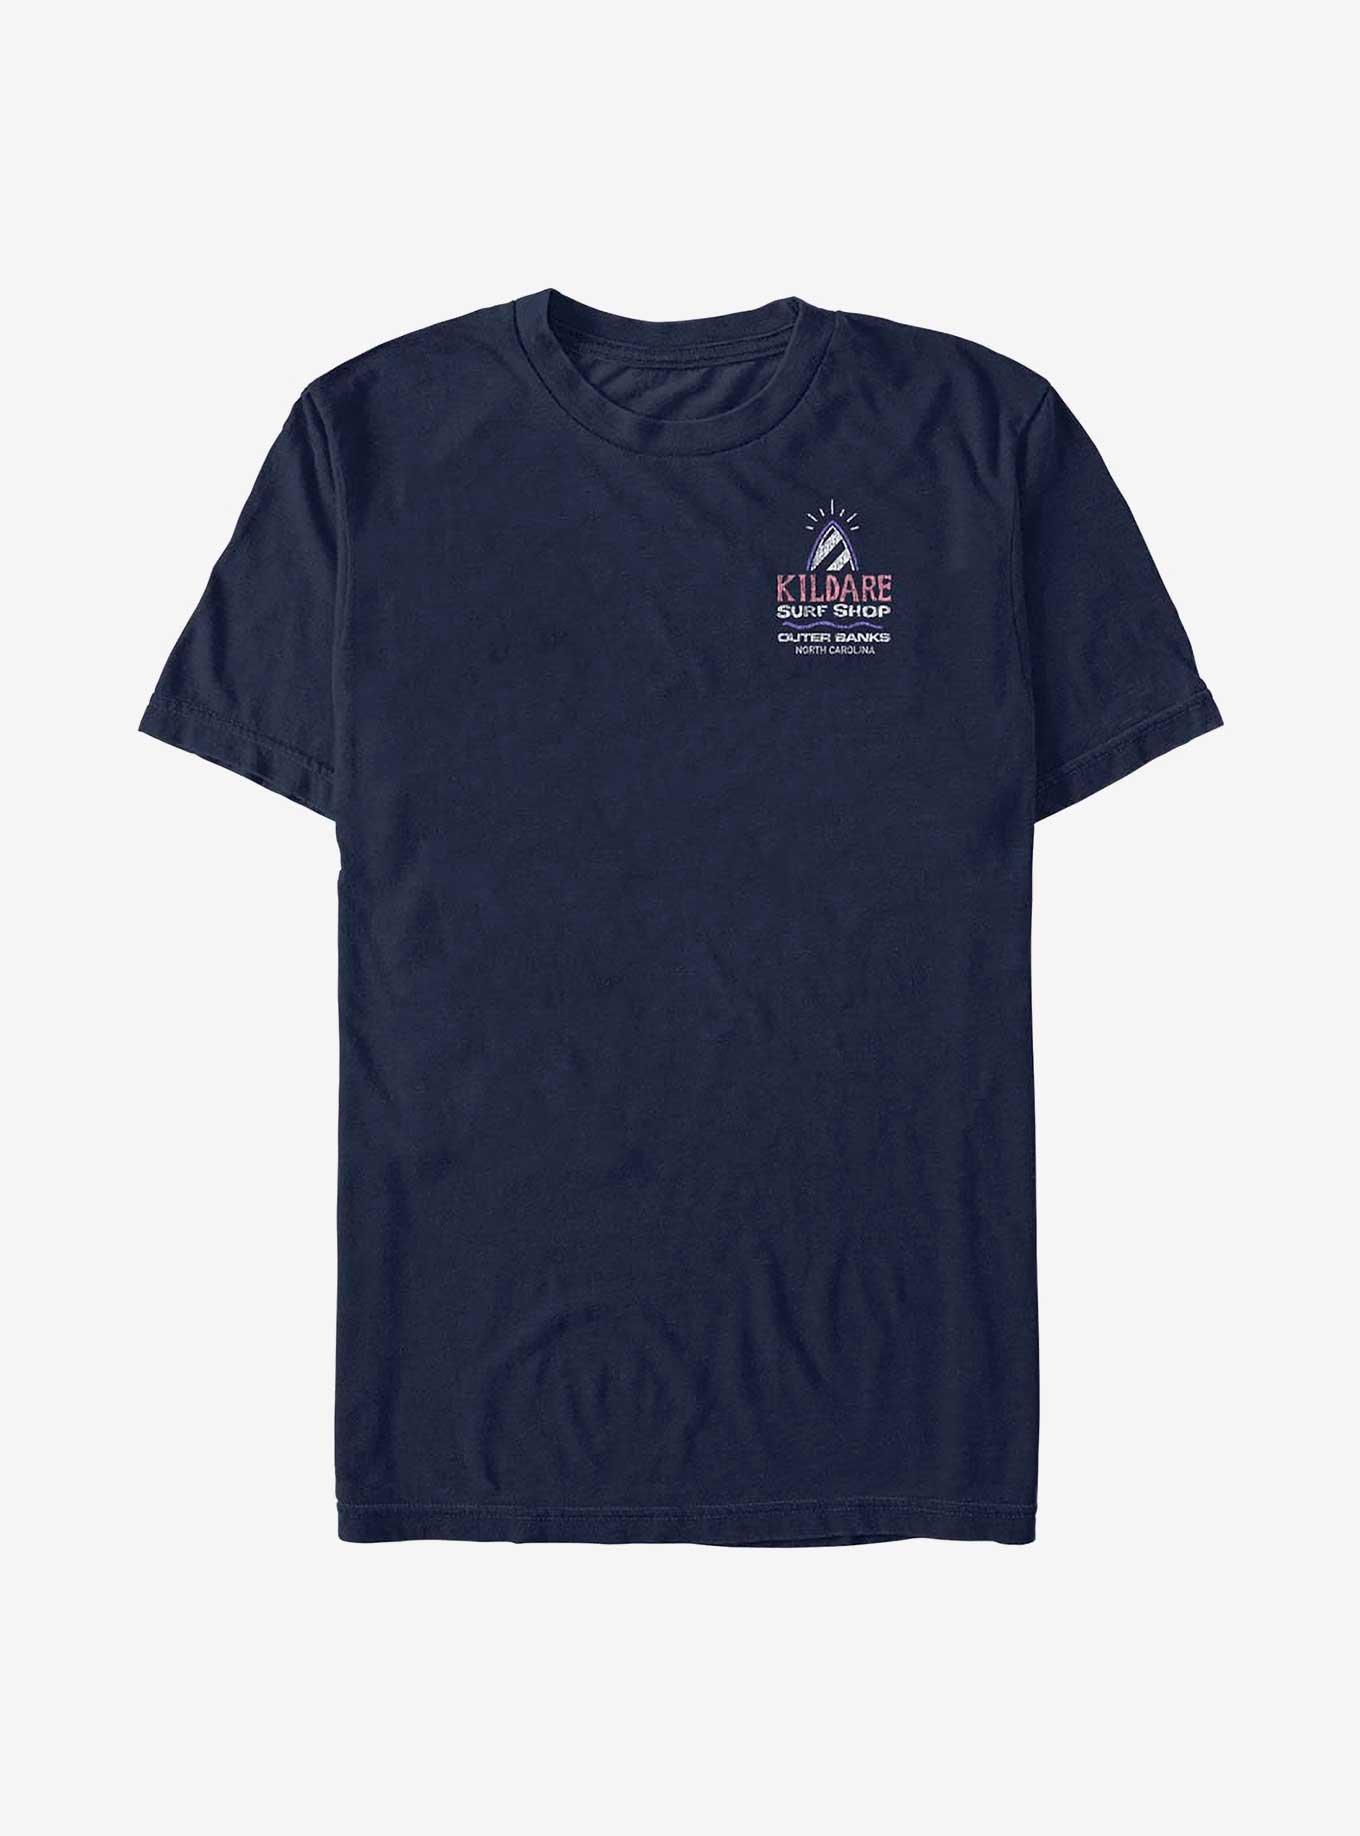 Outer Banks Kildare Surf Shop T-Shirt, NAVY, hi-res